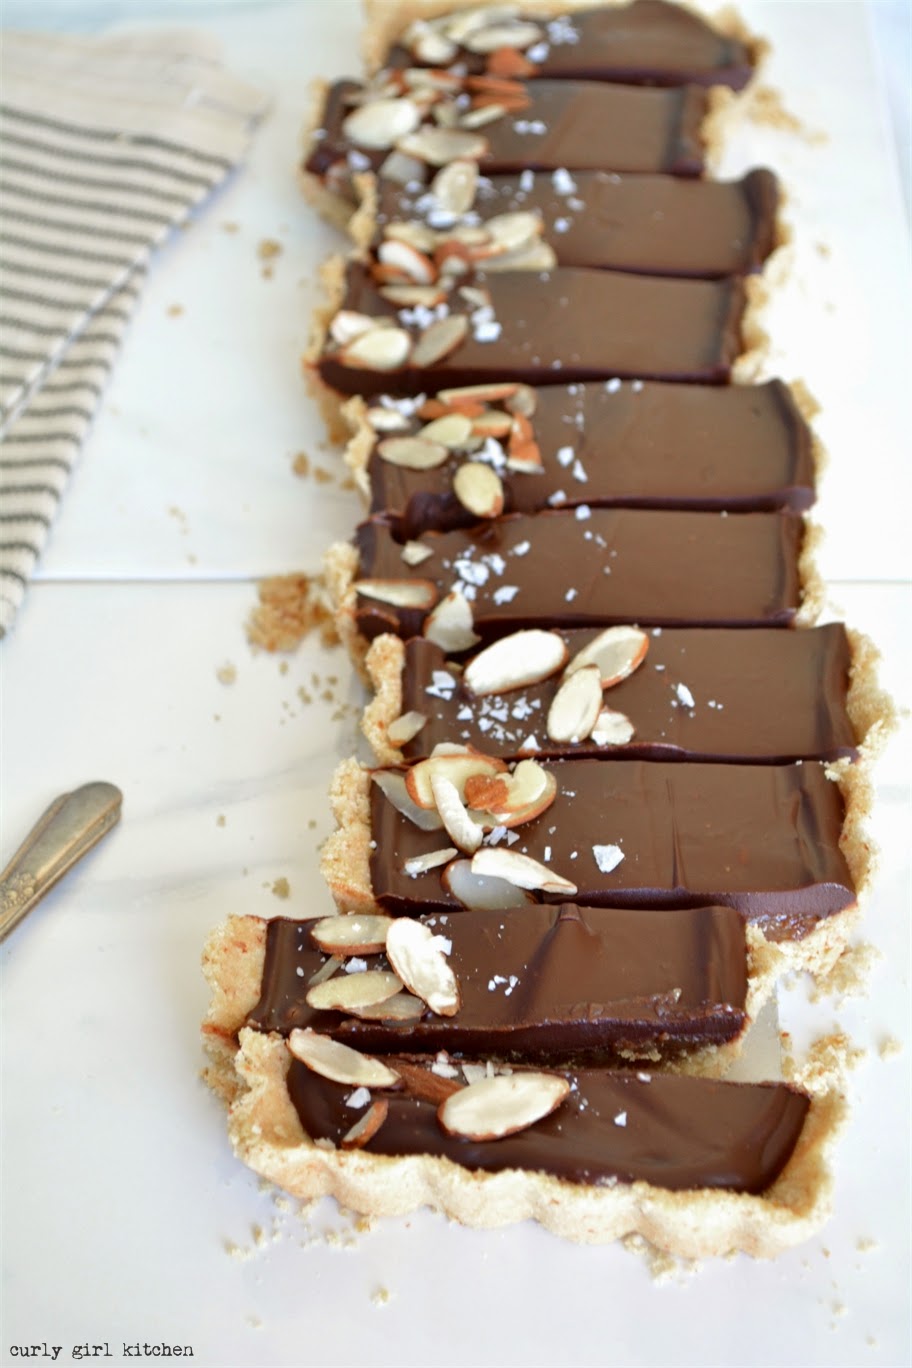 Curly Girl Kitchen: Chocolate Almond Tart